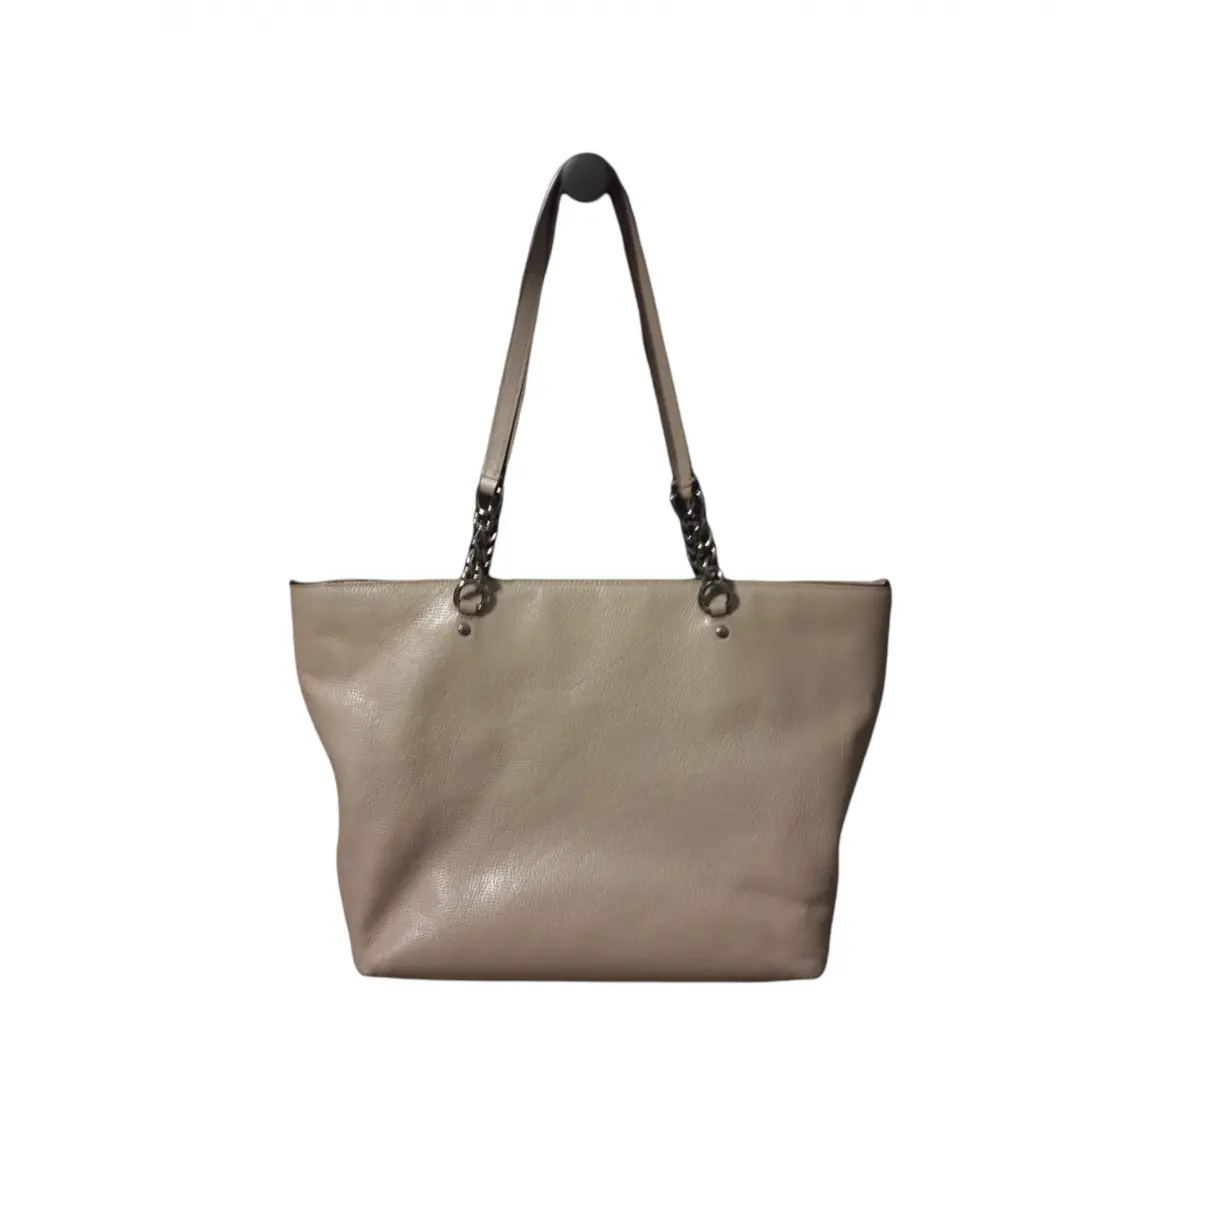 Buy Coach Crossgrain Kitt Carry All leather handbag online